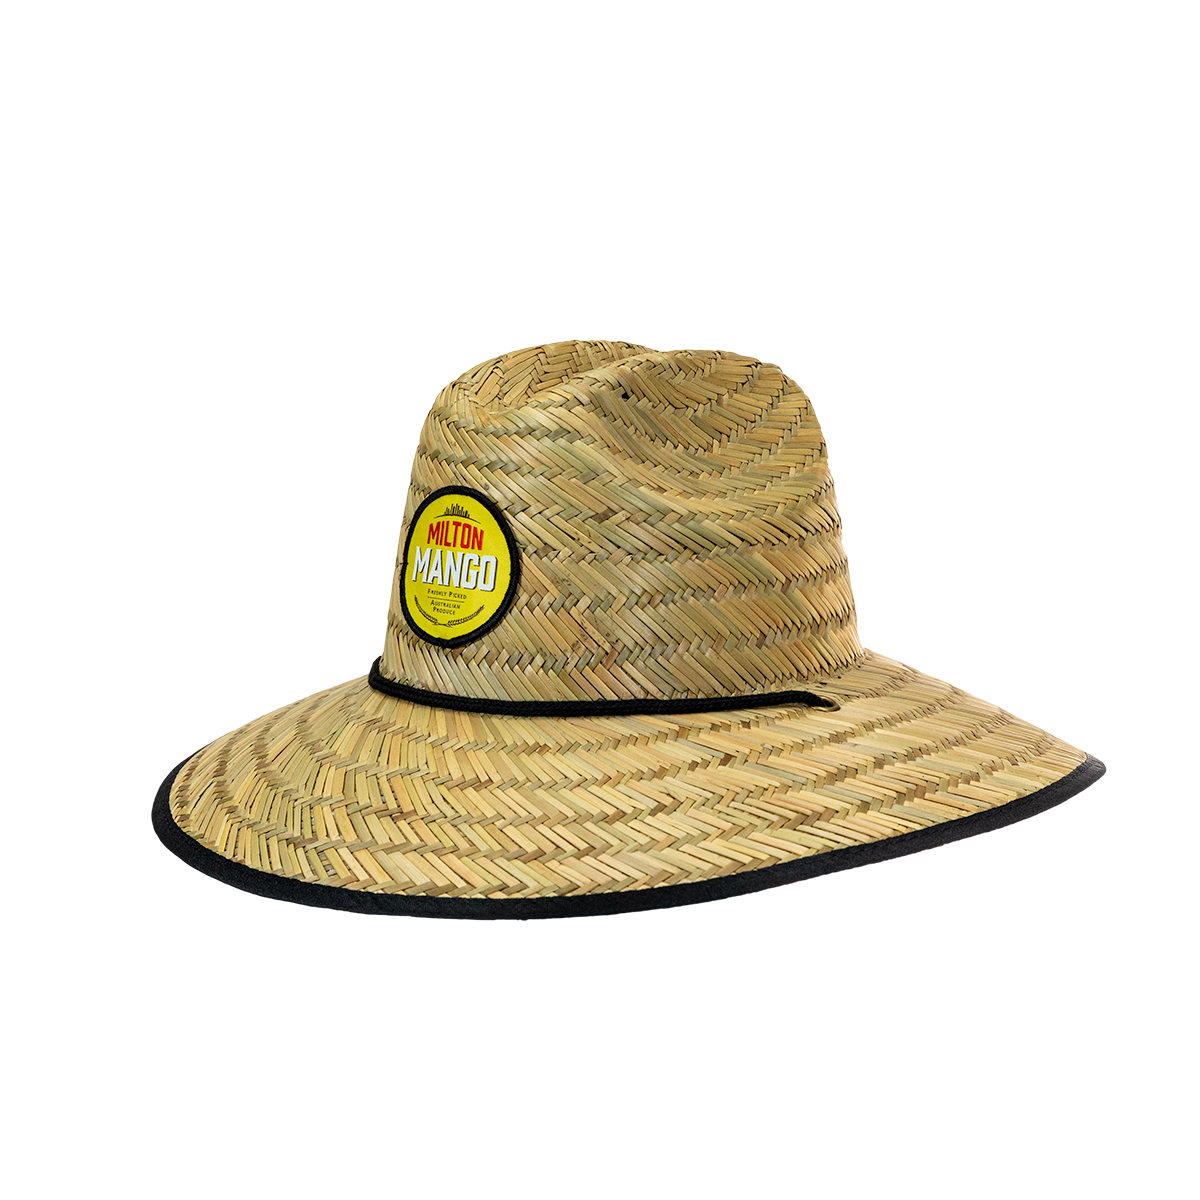 The Bowen Straw Hat